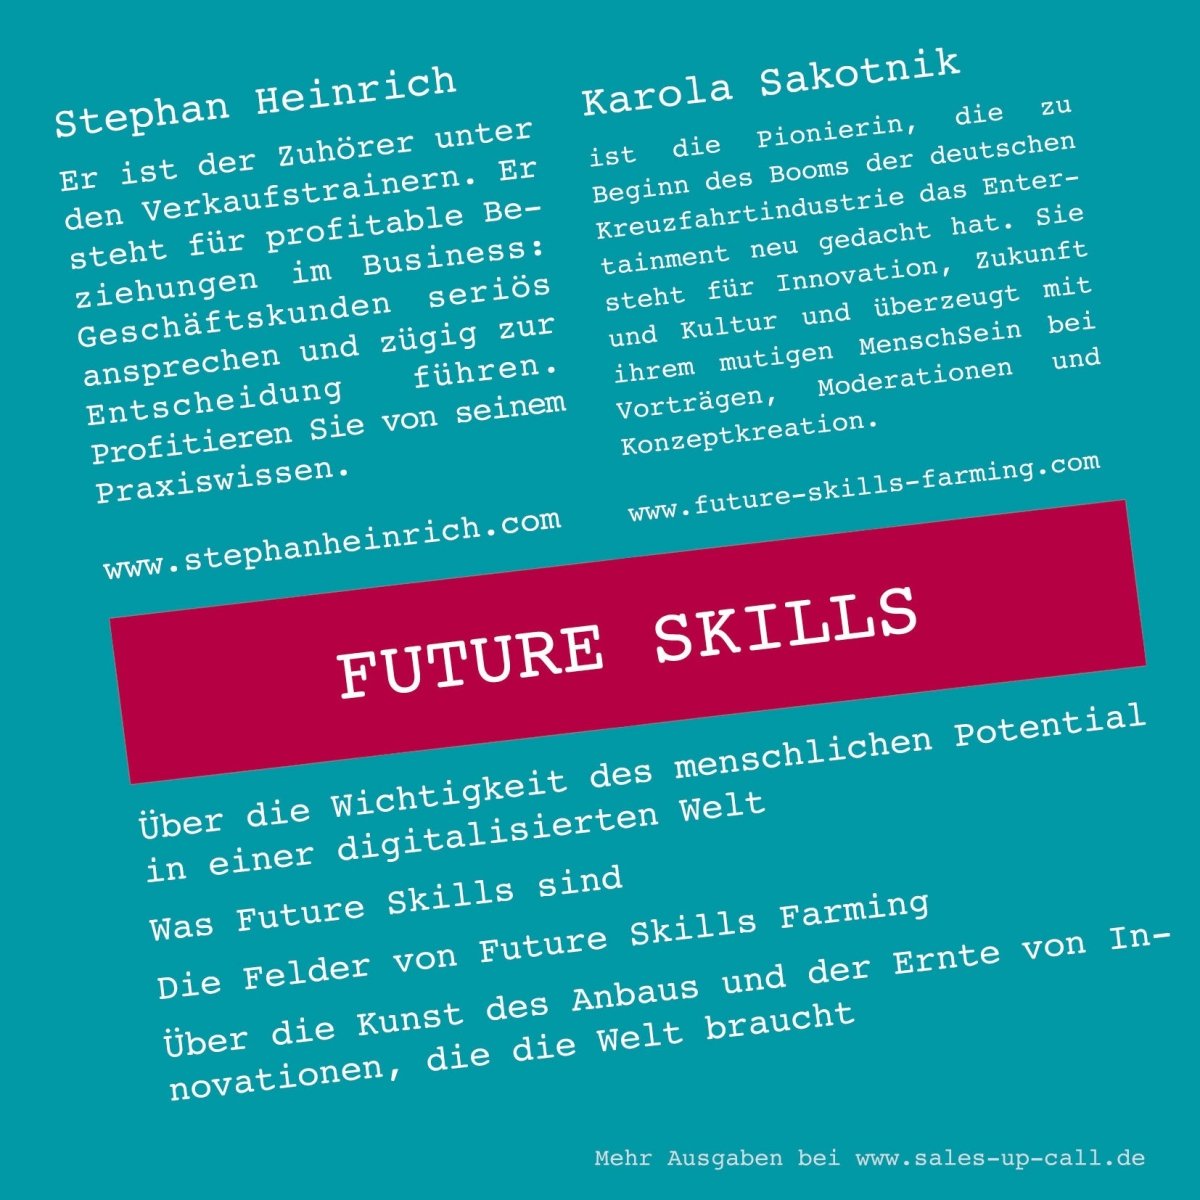 Future Skills - Sales-up-Call - Stephan Heinrich